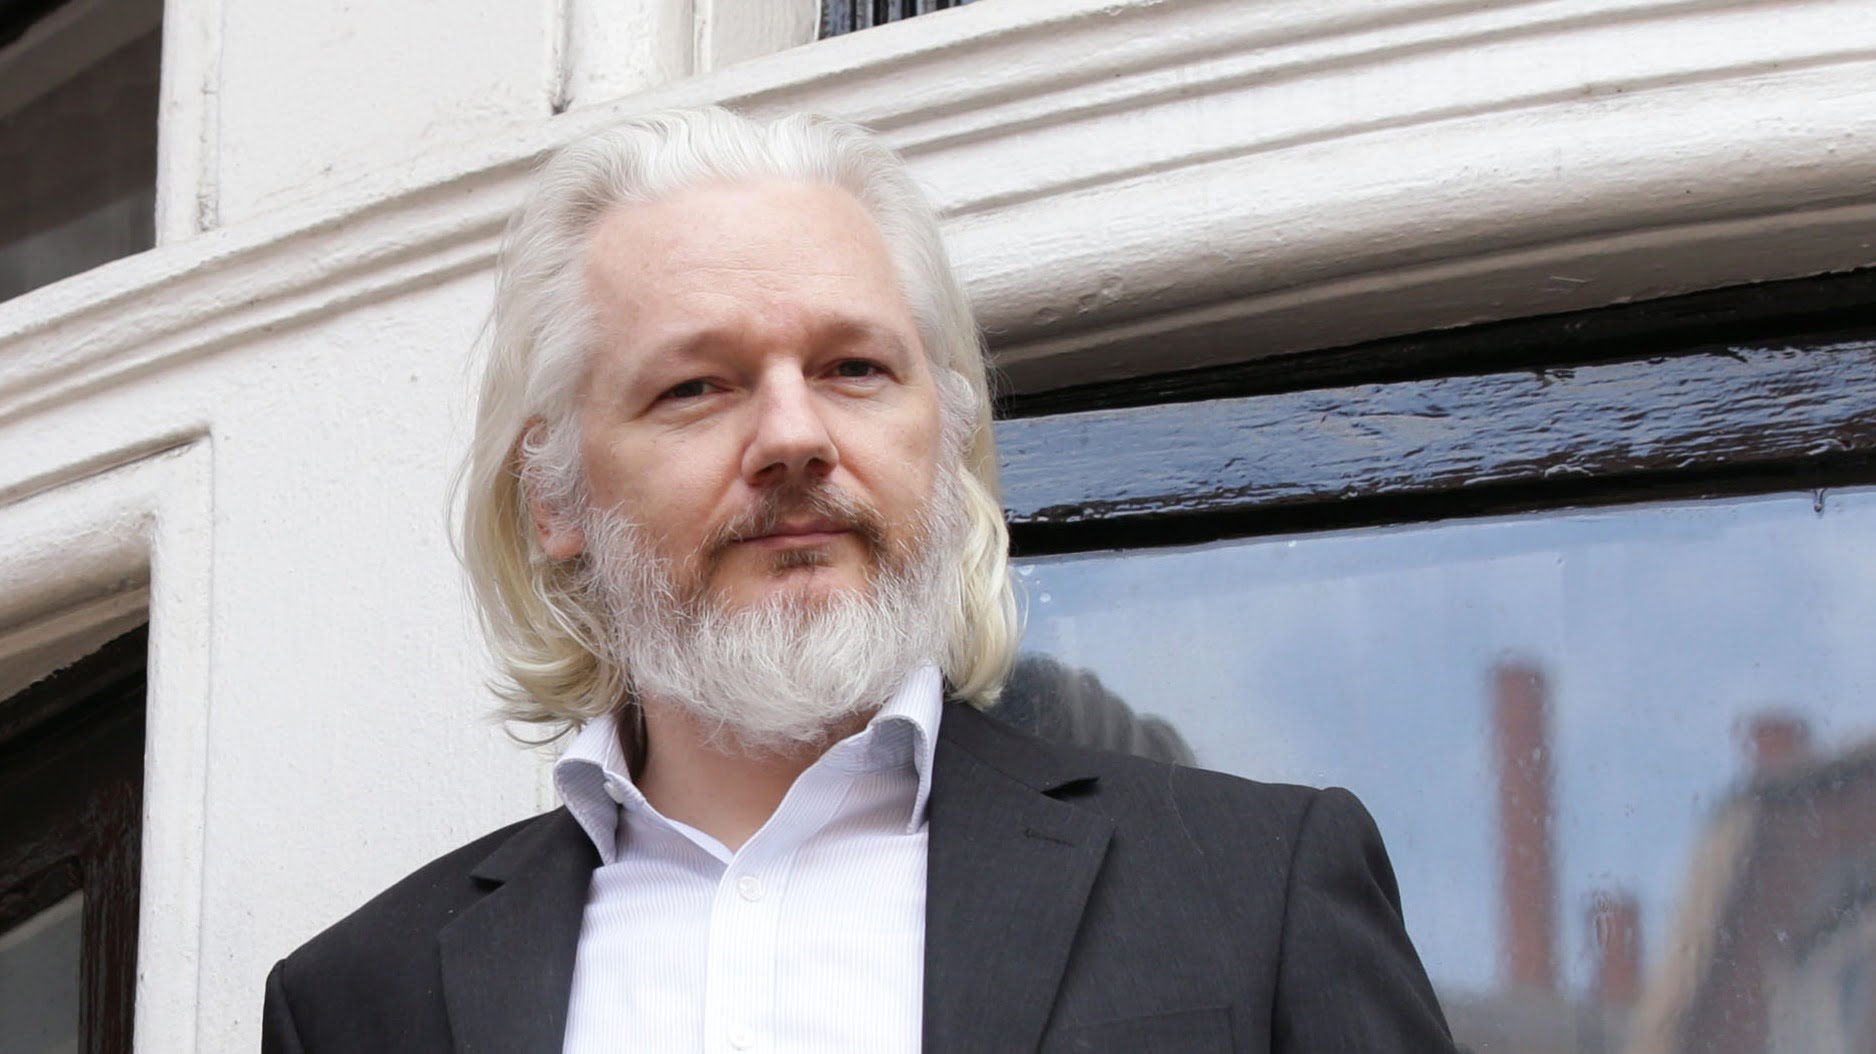 julian assange long white hair and beard